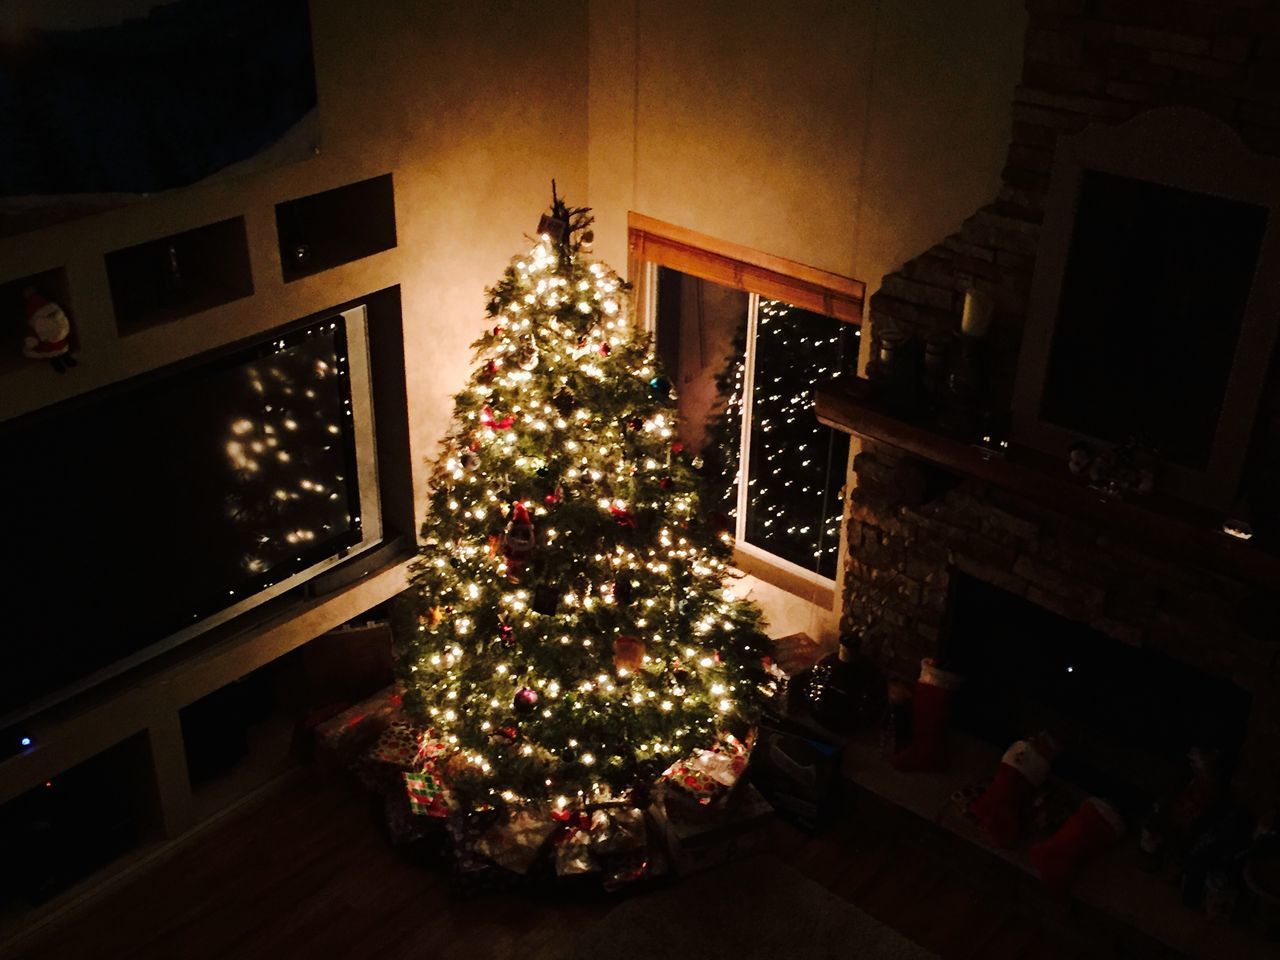 ILLUMINATED CHRISTMAS TREE IN HOME